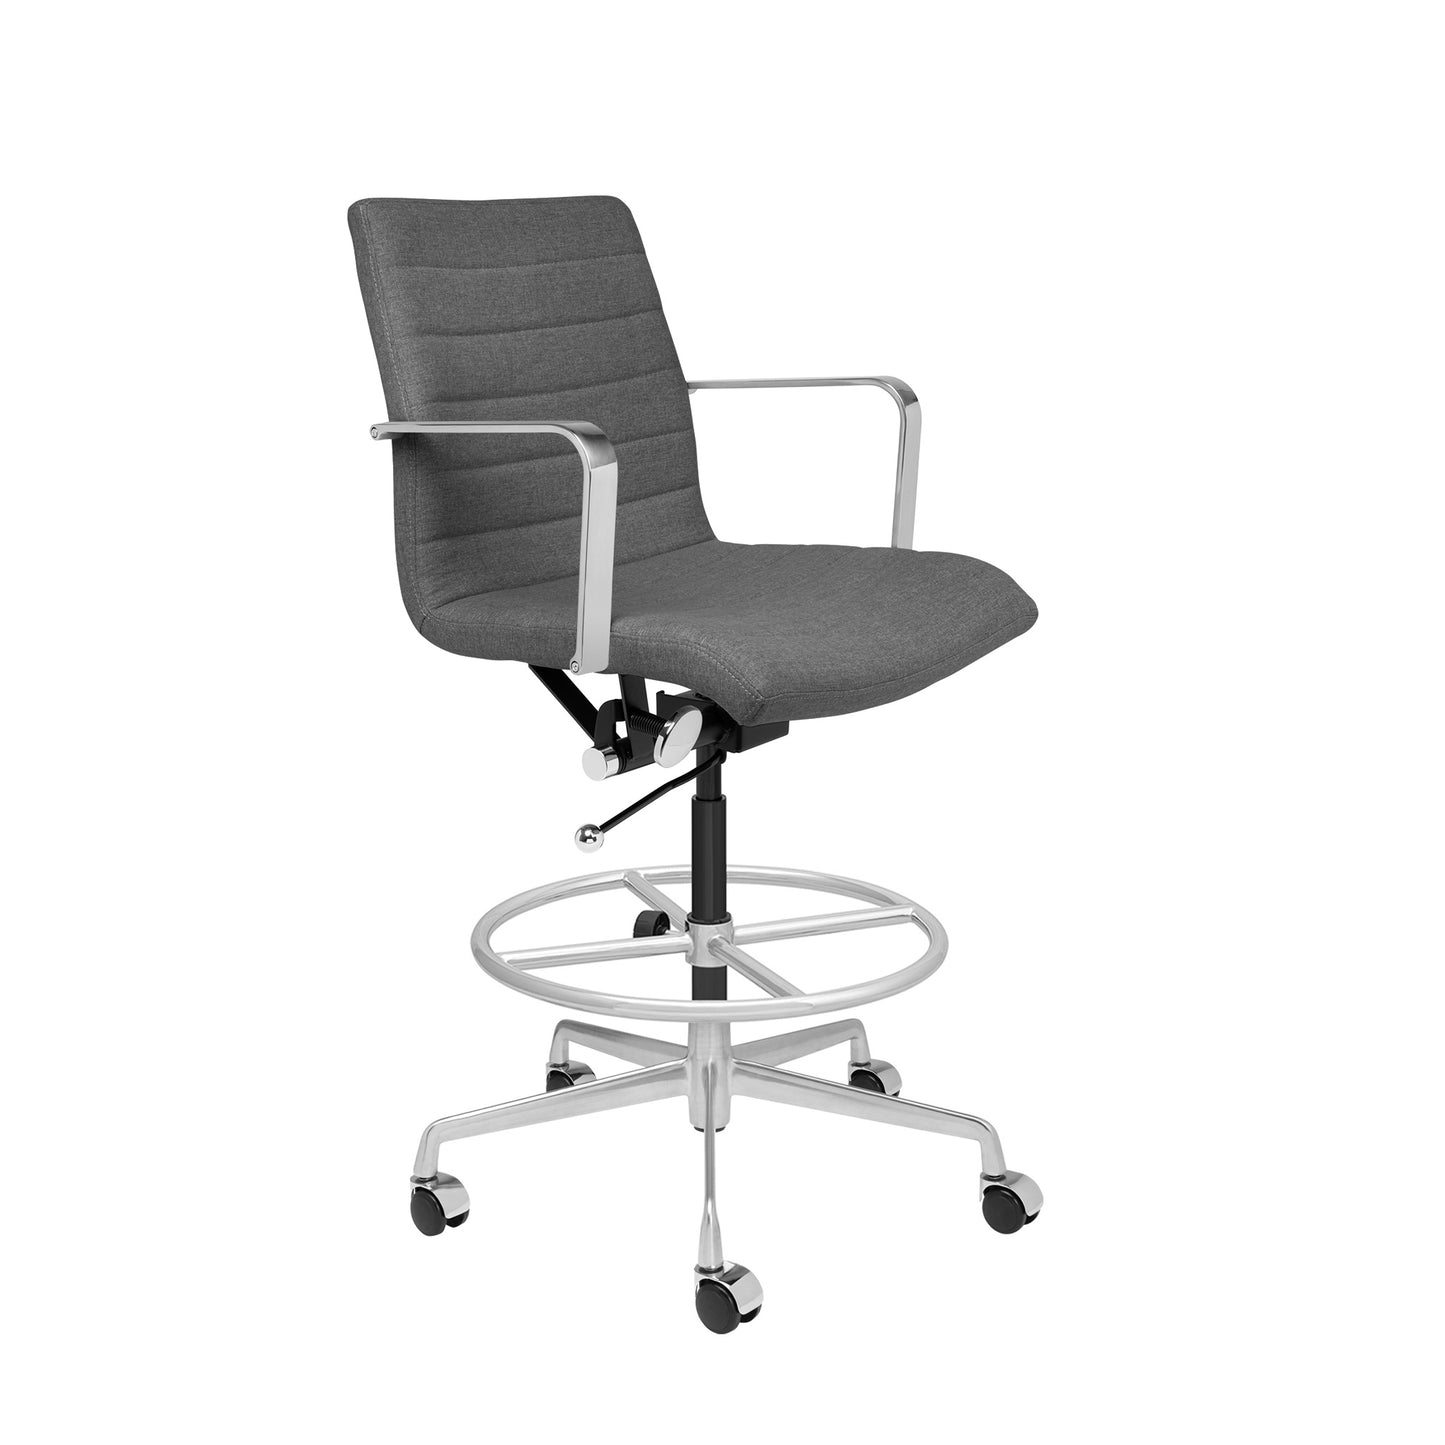 SHIPS MAY 17TH - SOHO II Ribbed Drafting Chair (Charcoal Fabric)